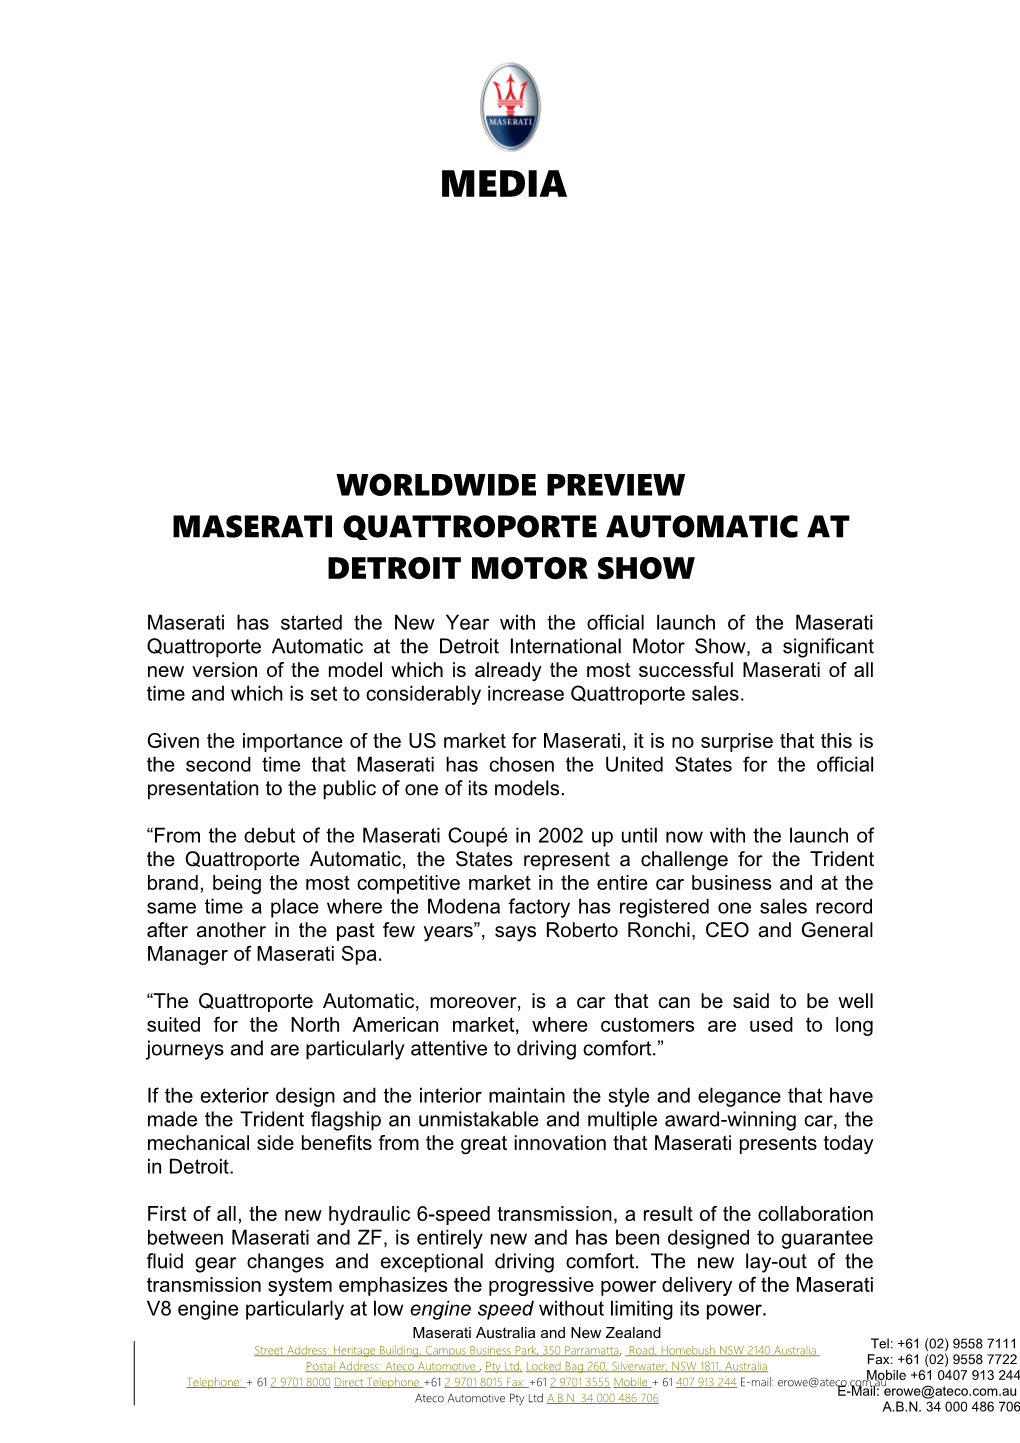 Maserati Quattroporte Automatic at Detroit Motor Show